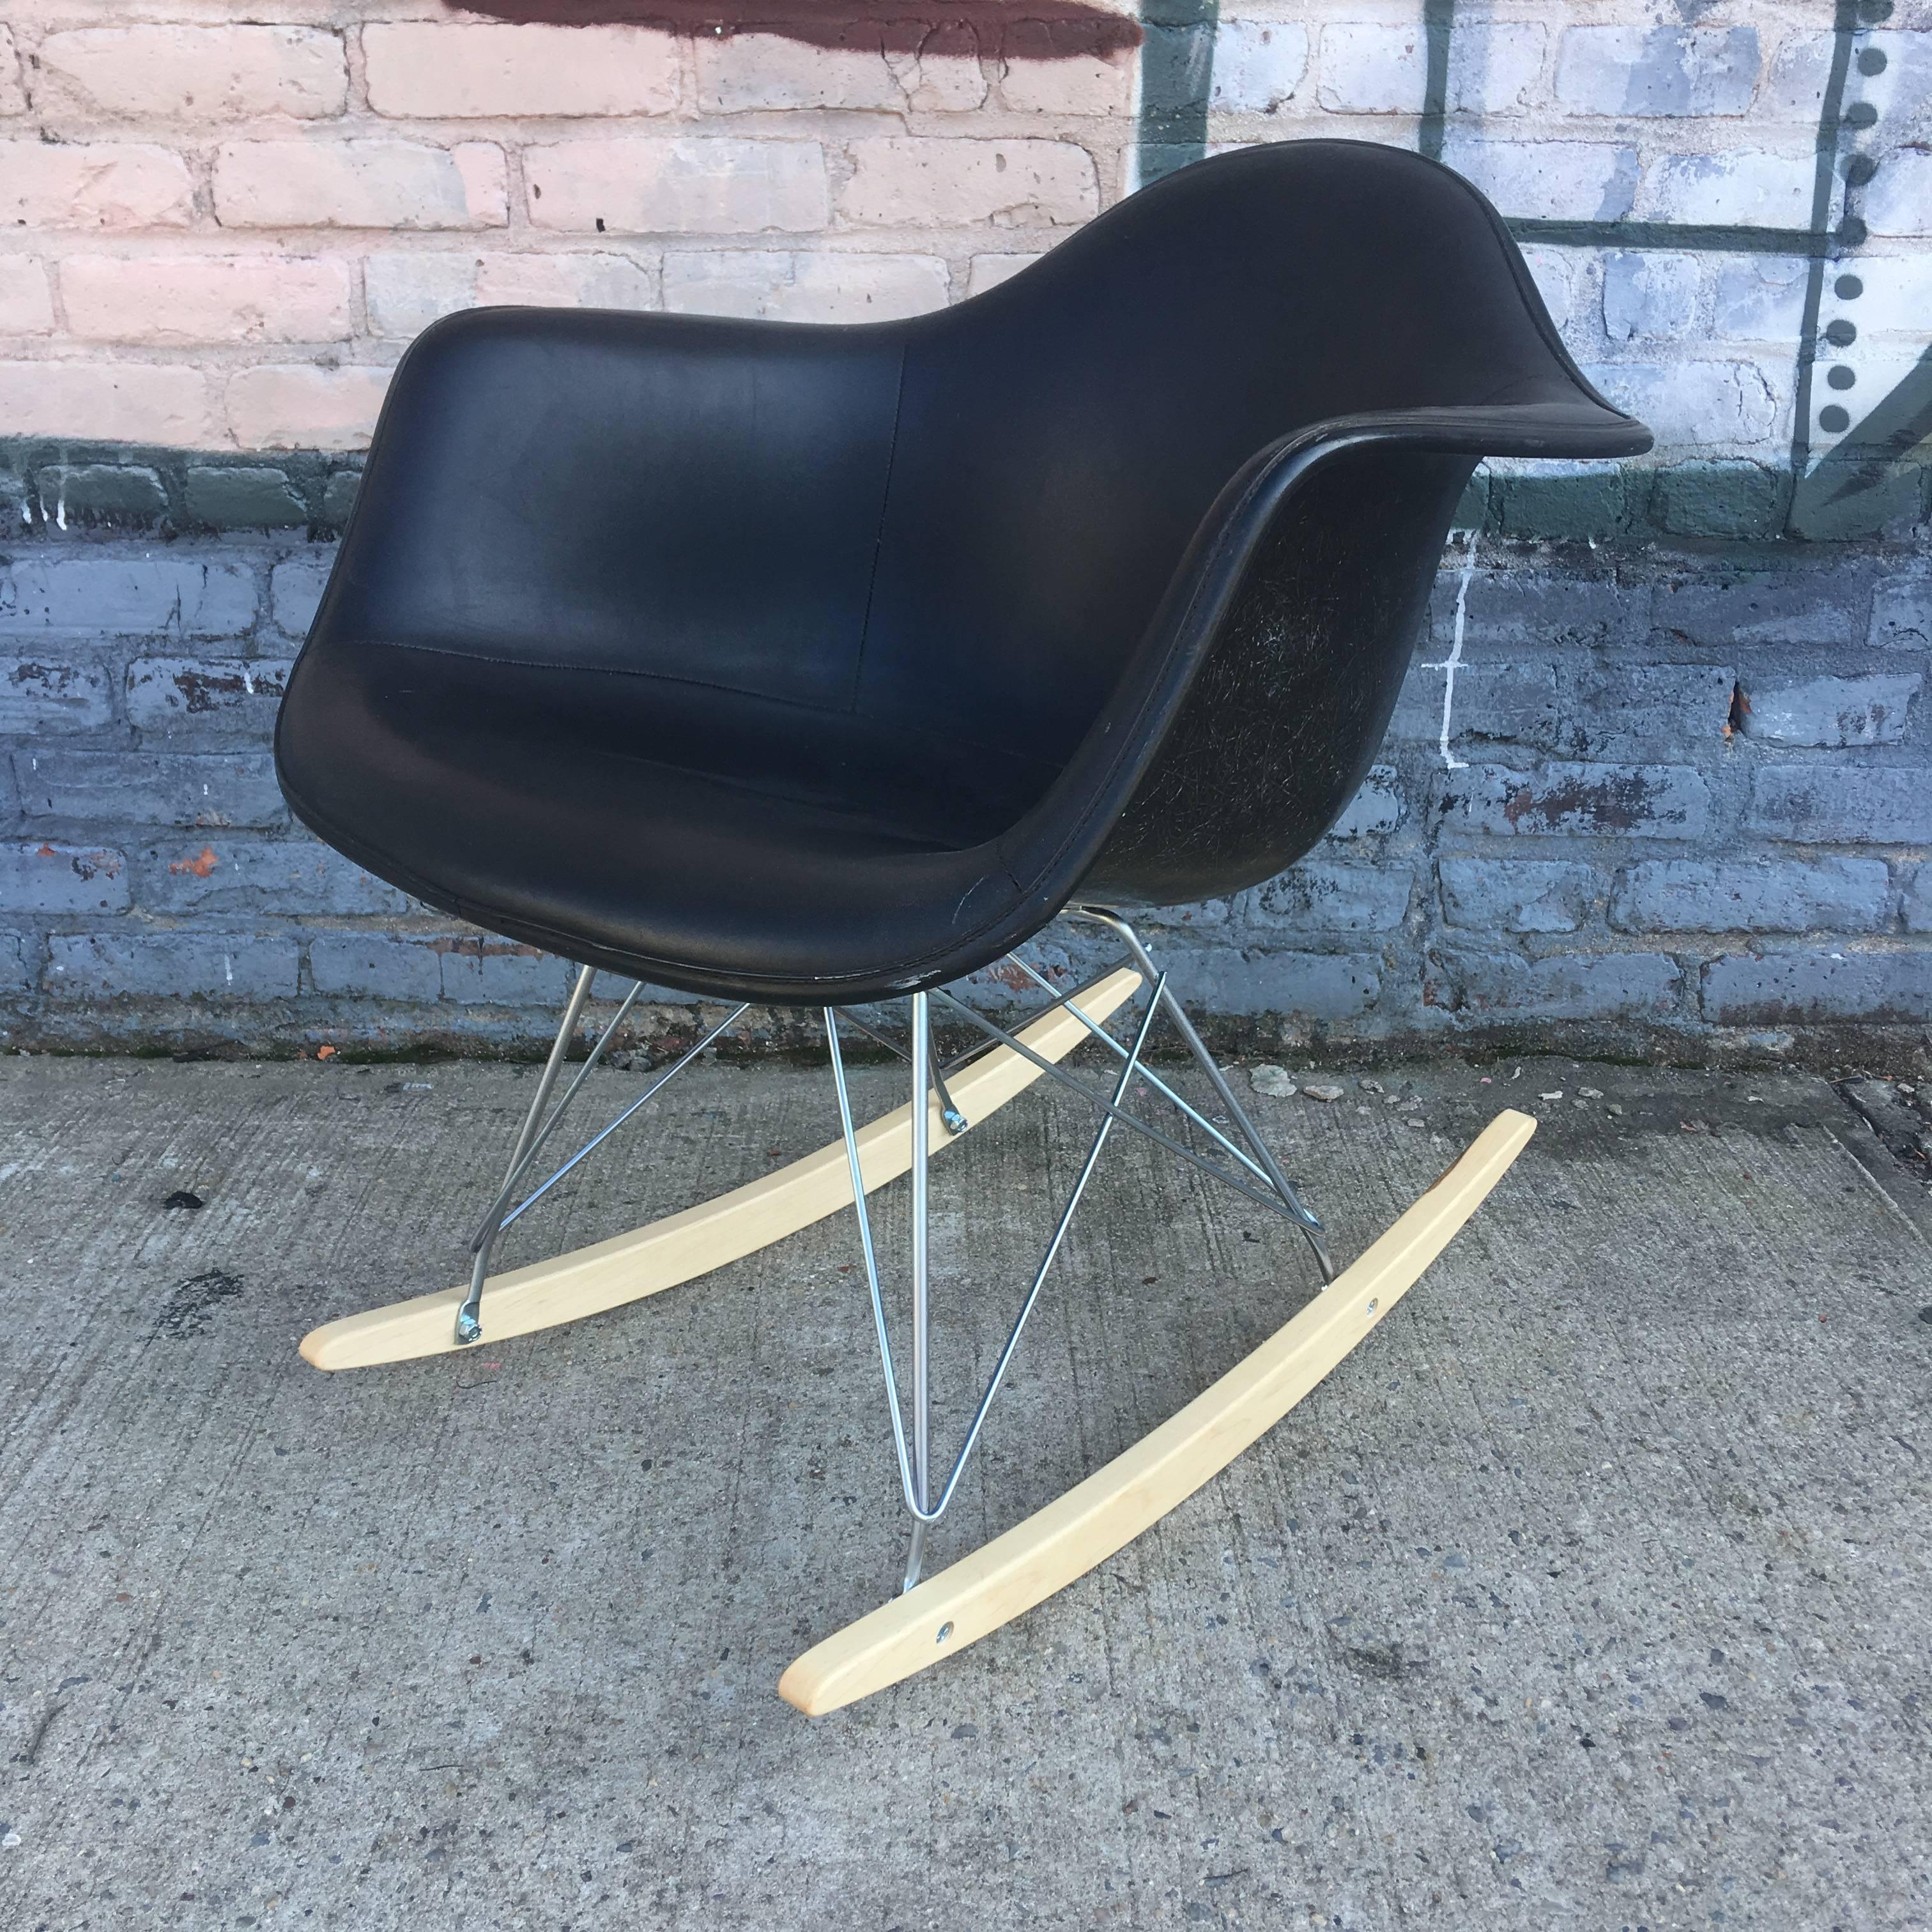 Herman Miller Eames fiberglass rocking chair. Black Naugahyde upholstery on rare black fiberglass shell. No cracks or damage to shell.